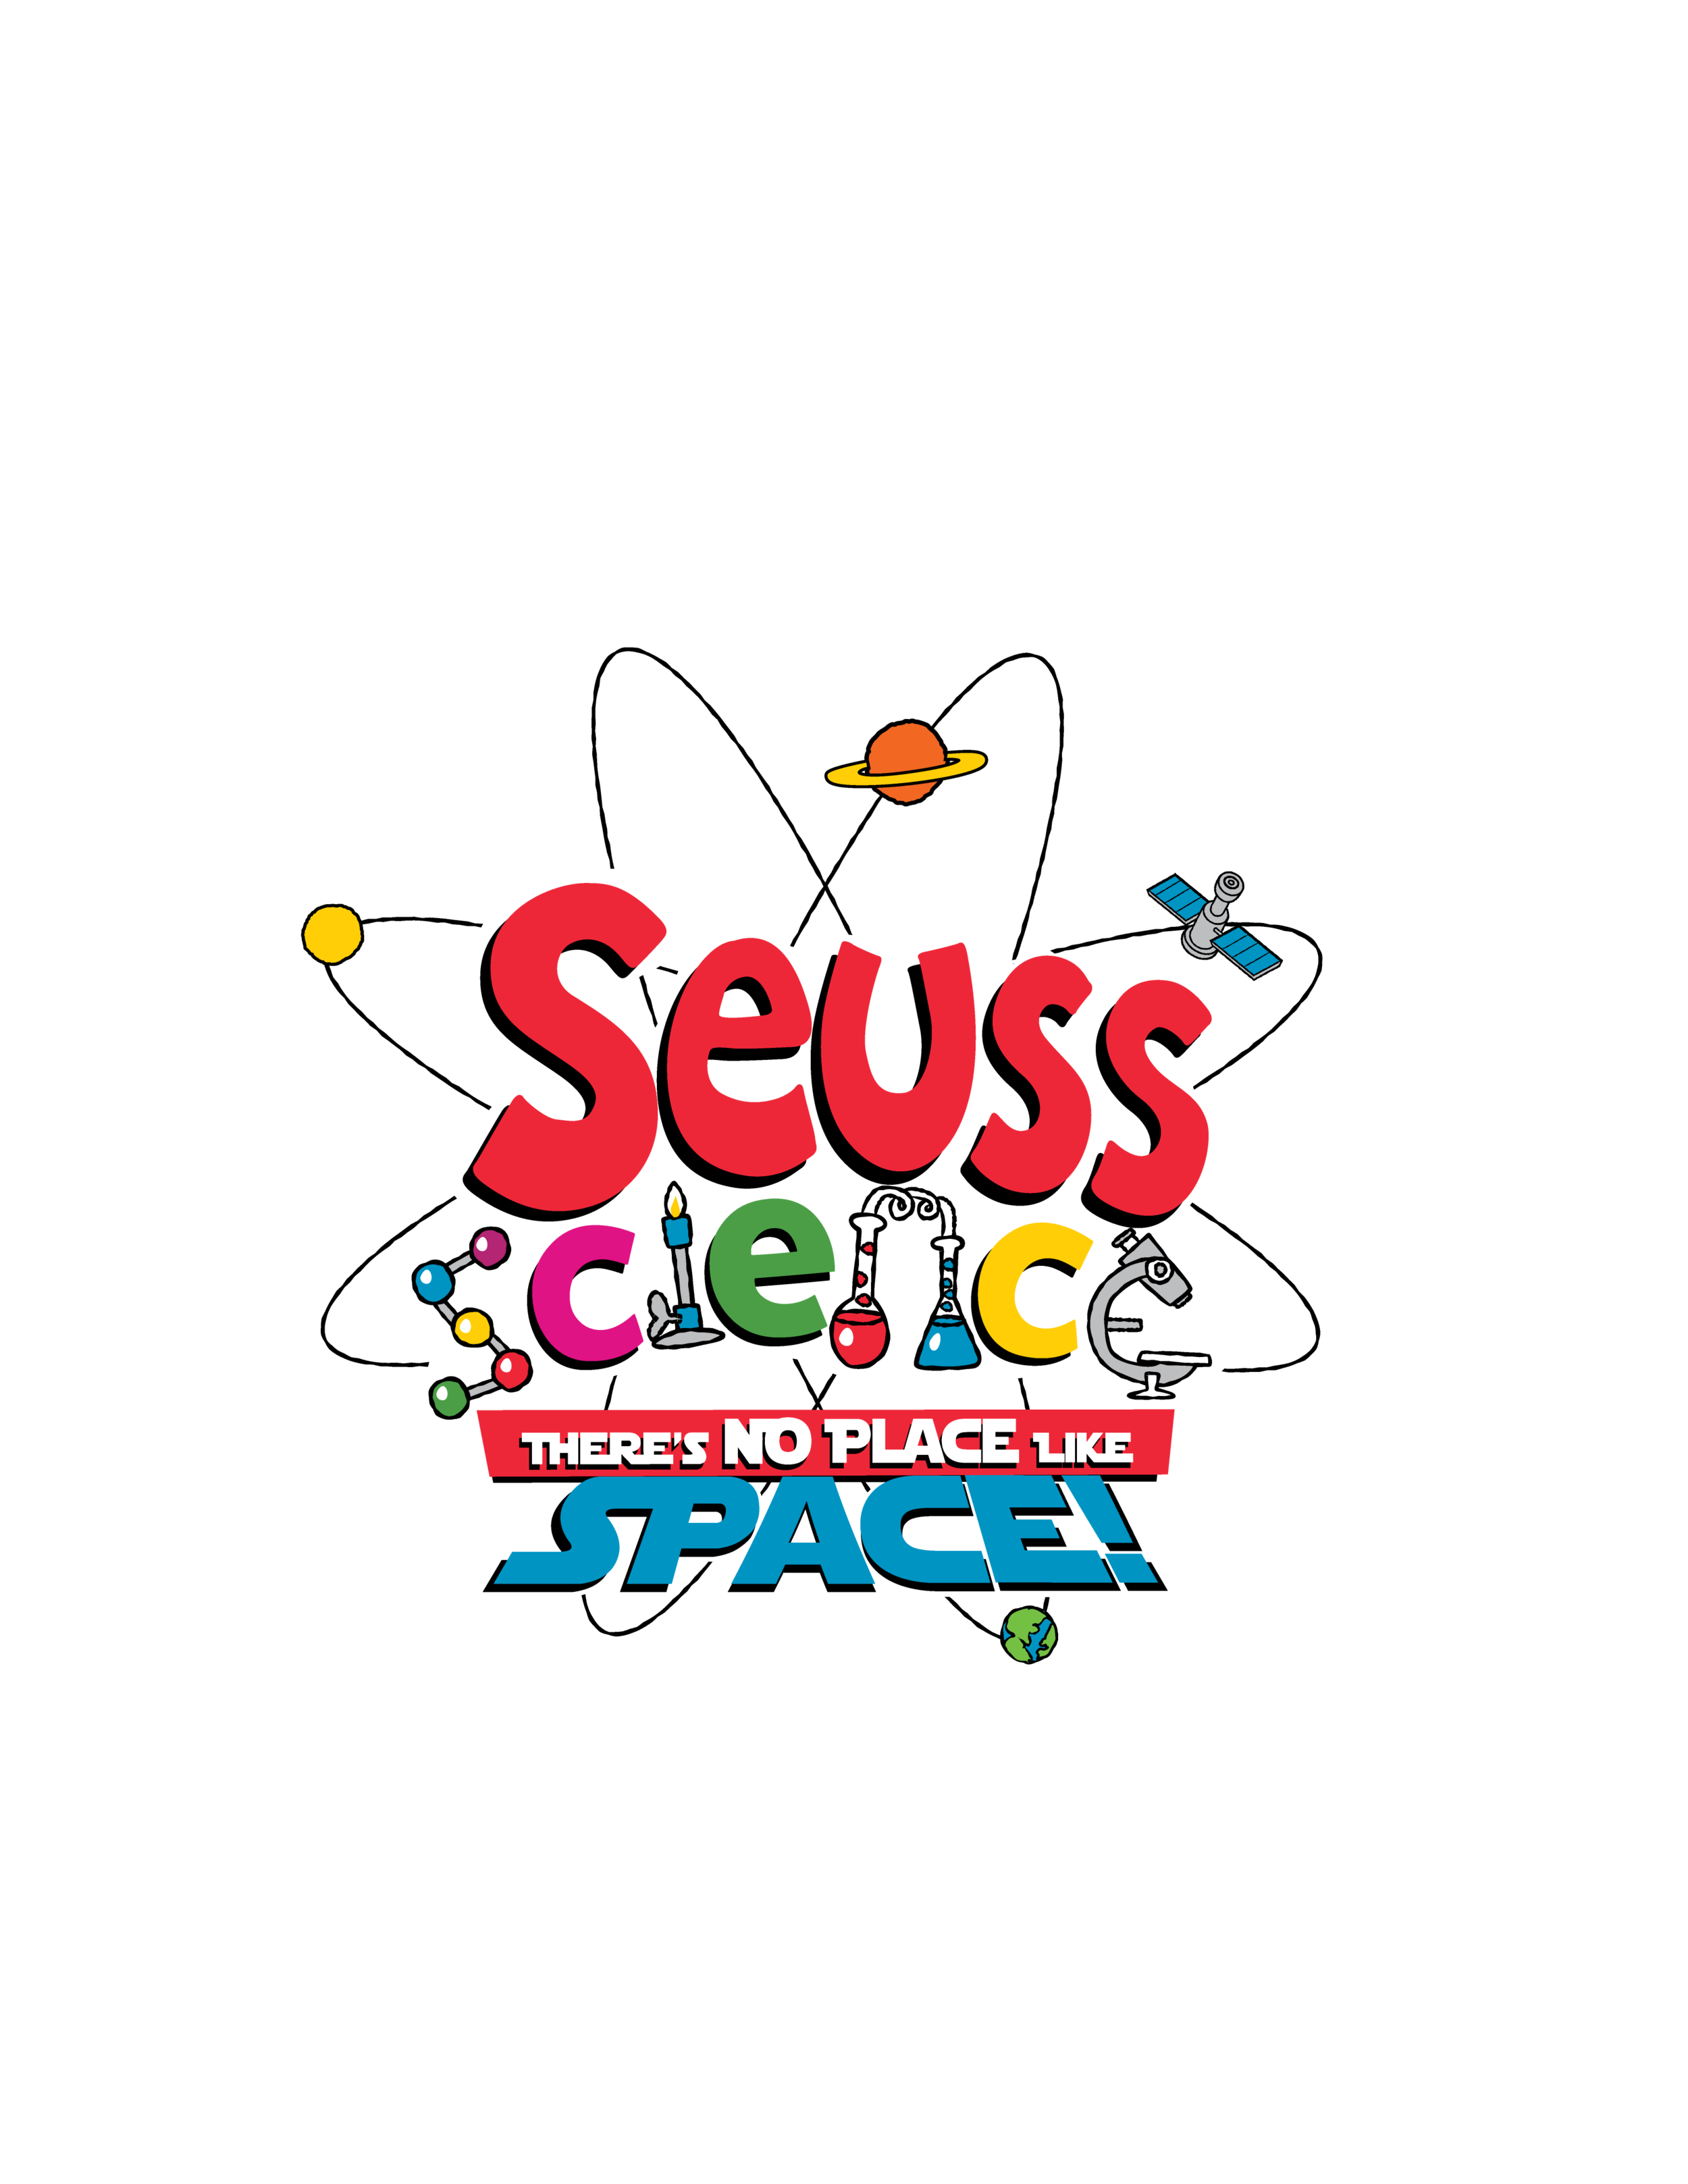 SEUSS_SPACE_LOGO_03.png